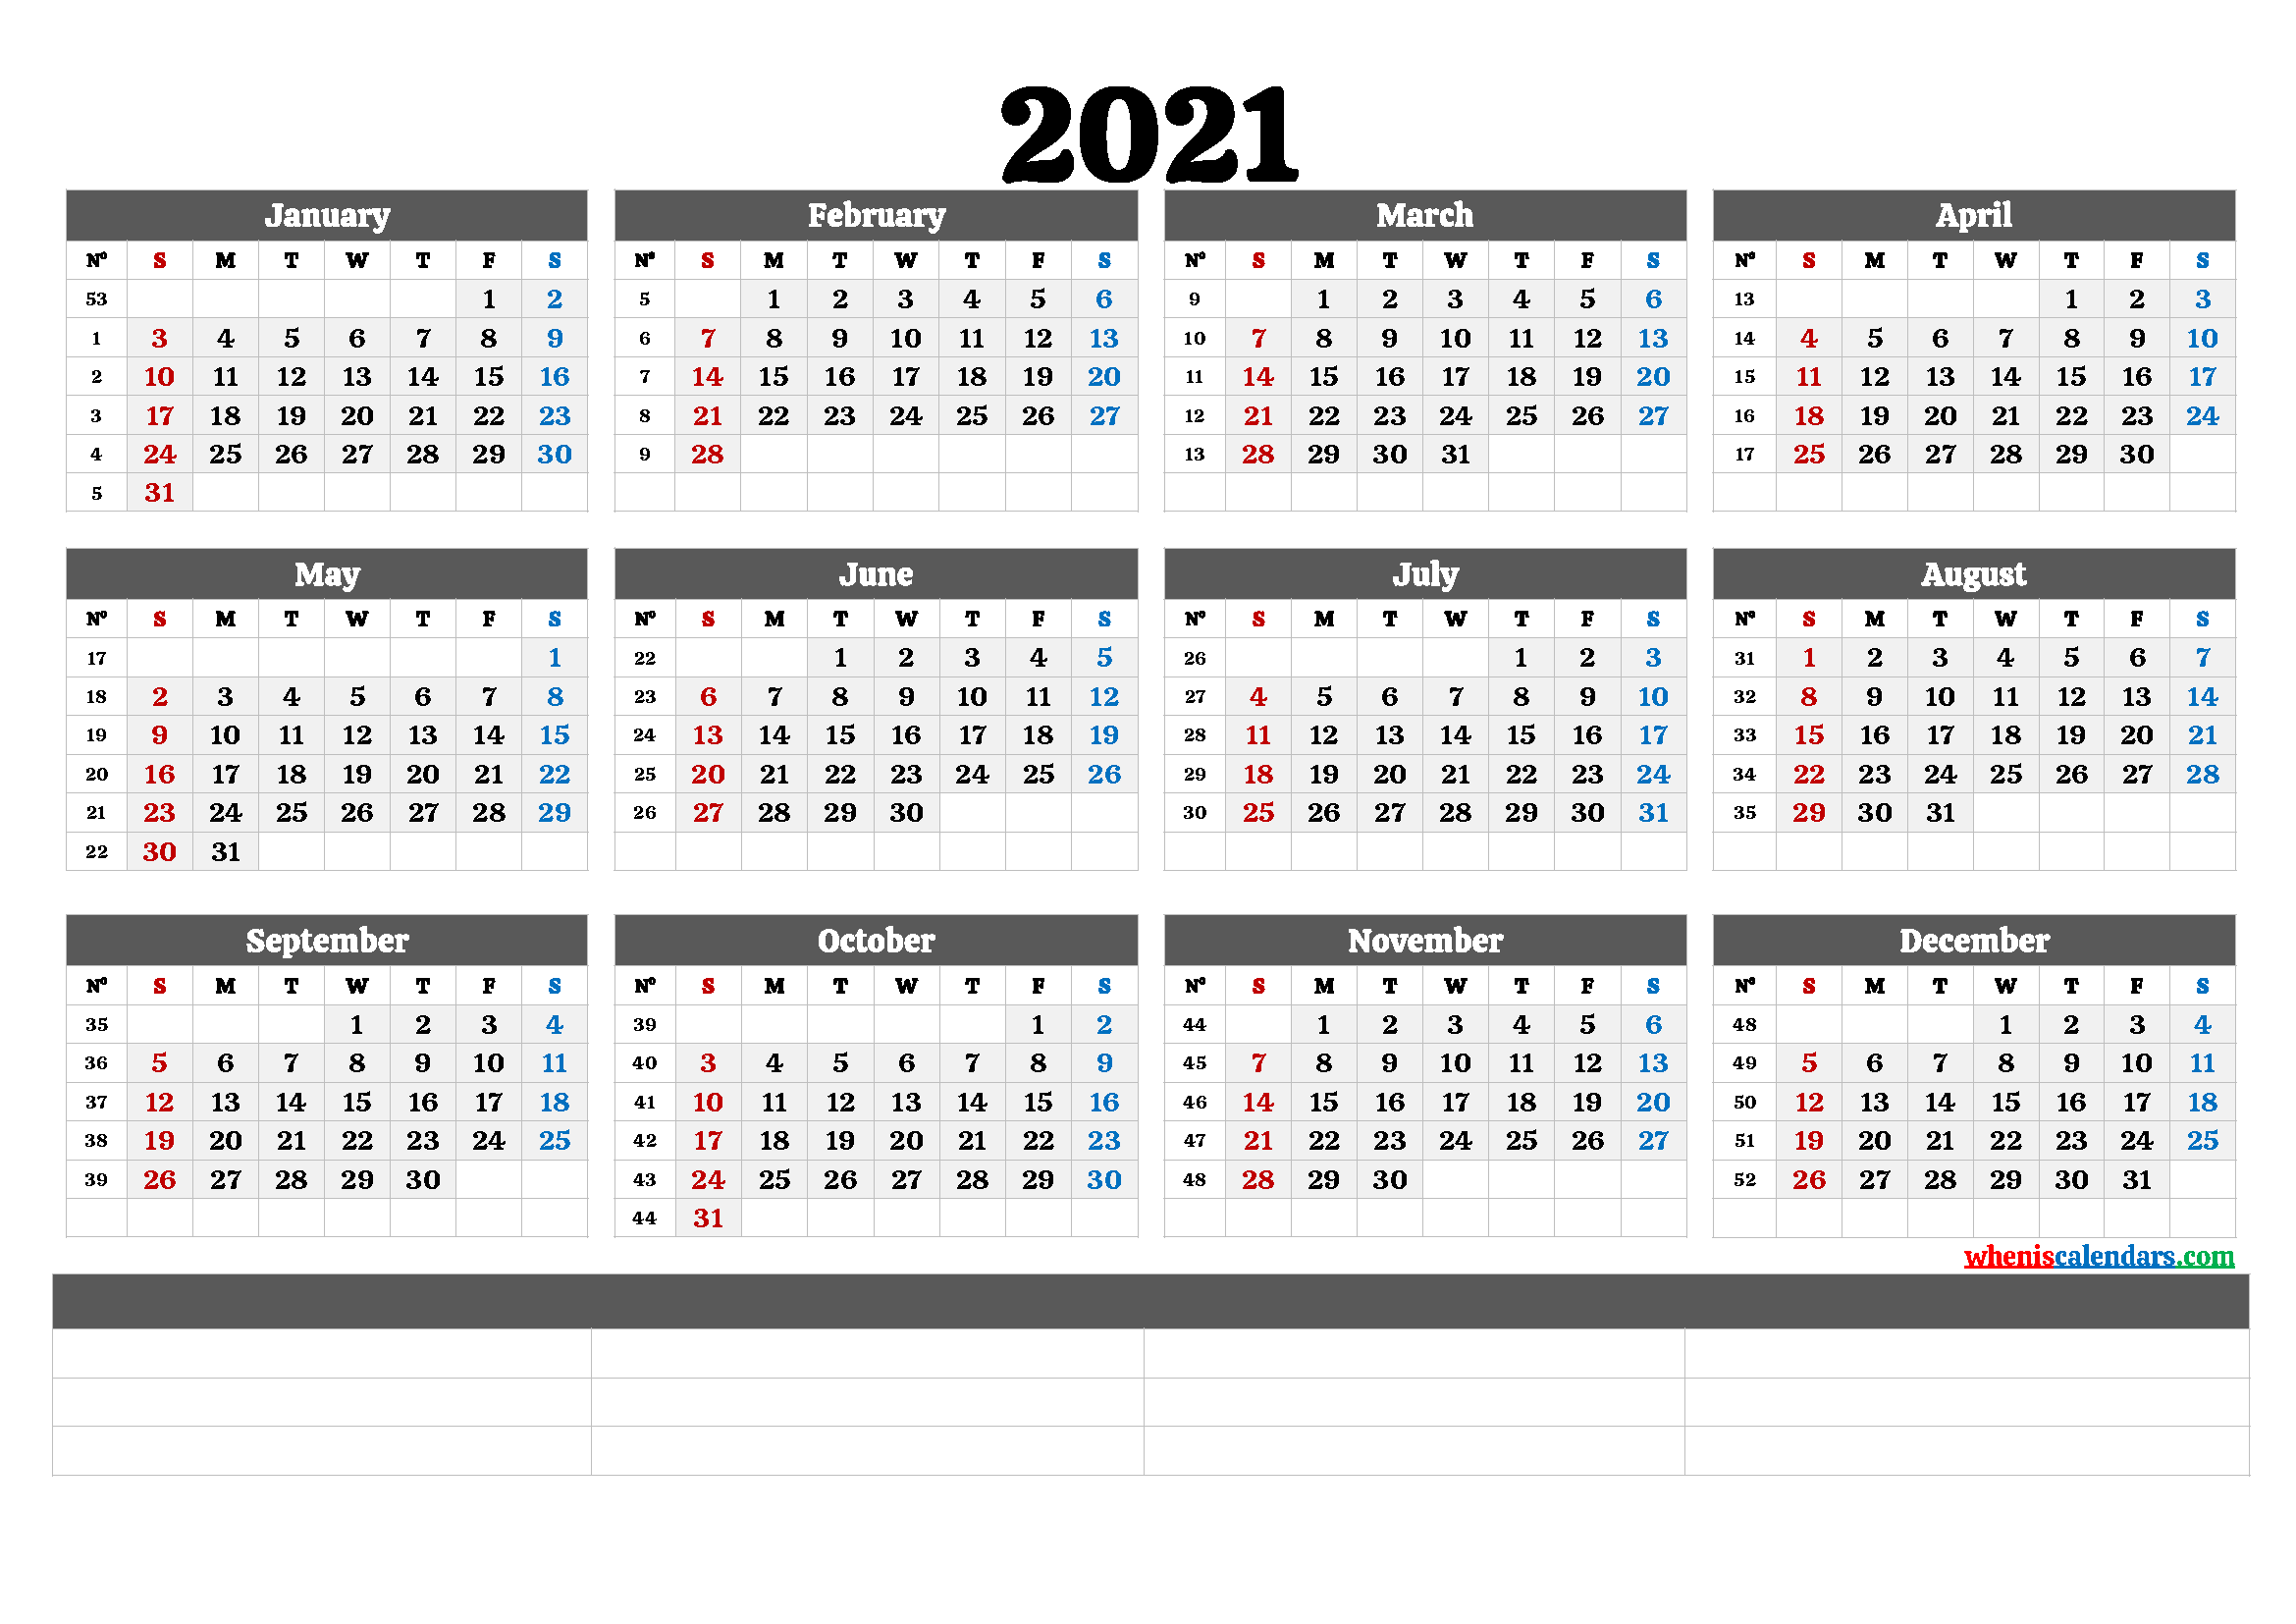 2021 Annual Calendar Printable (6 Templates) | Free ...